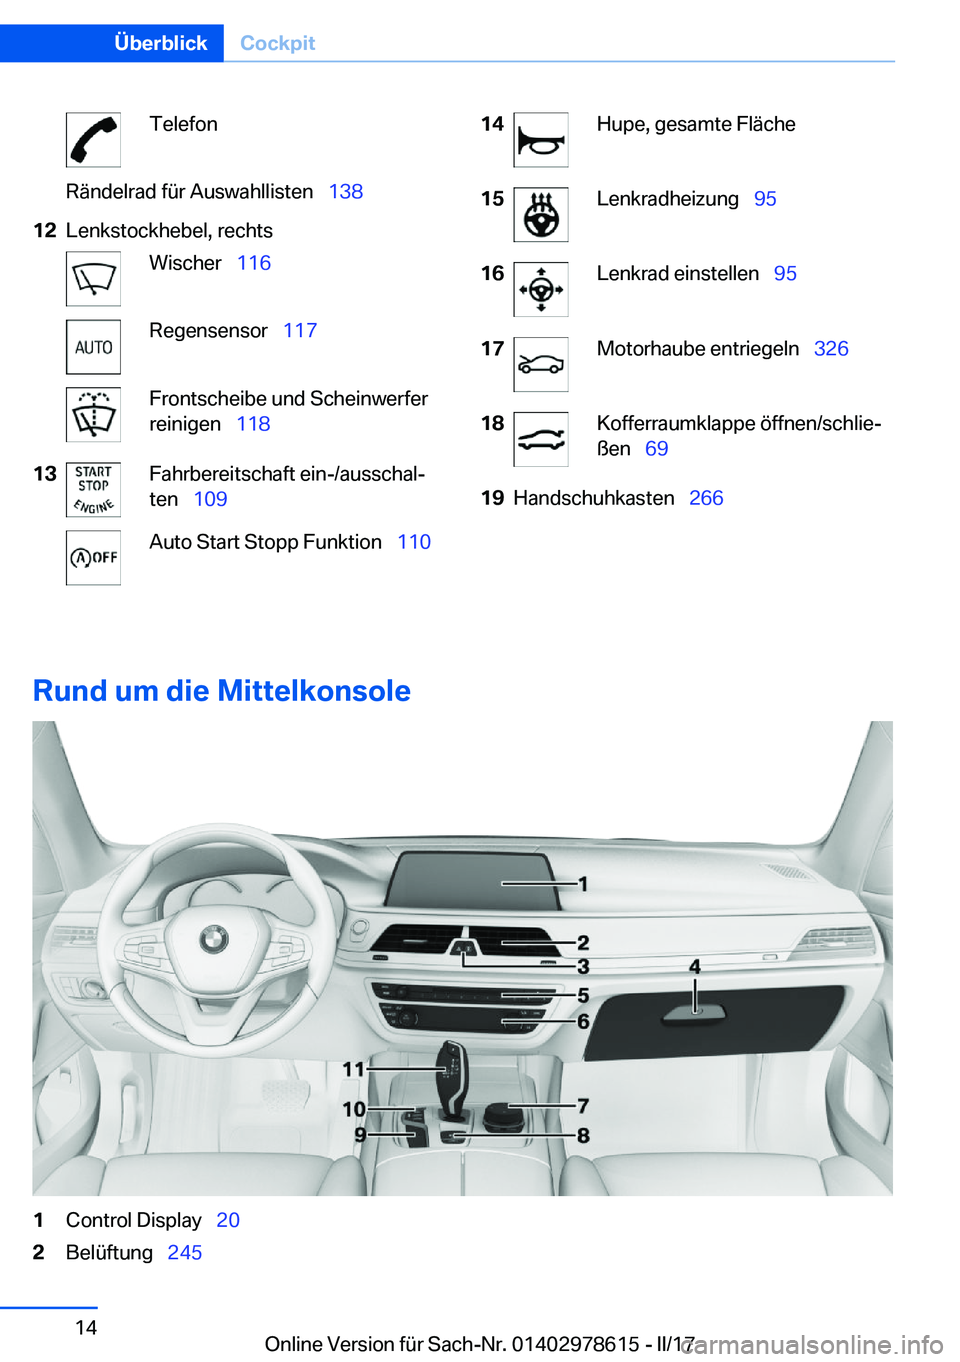 BMW 7 SERIES 2018  Betriebsanleitungen (in German) �T�e�l�e�f�o�n�R�ä�n�d�e�l�r�a�d� �f�ü�r� �A�u�s�w�a�h�l�l�i�s�t�e�n\_�1�3�8�1�2�L�e�n�k�s�t�o�c�k�h�e�b�e�l�,� �r�e�c�h�t�s�W�i�s�c�h�e�r\_�1�1�6�R�e�g�e�n�s�e�n�s�o�r\_ �1�1�7�F�r�o�n�t�s�c�